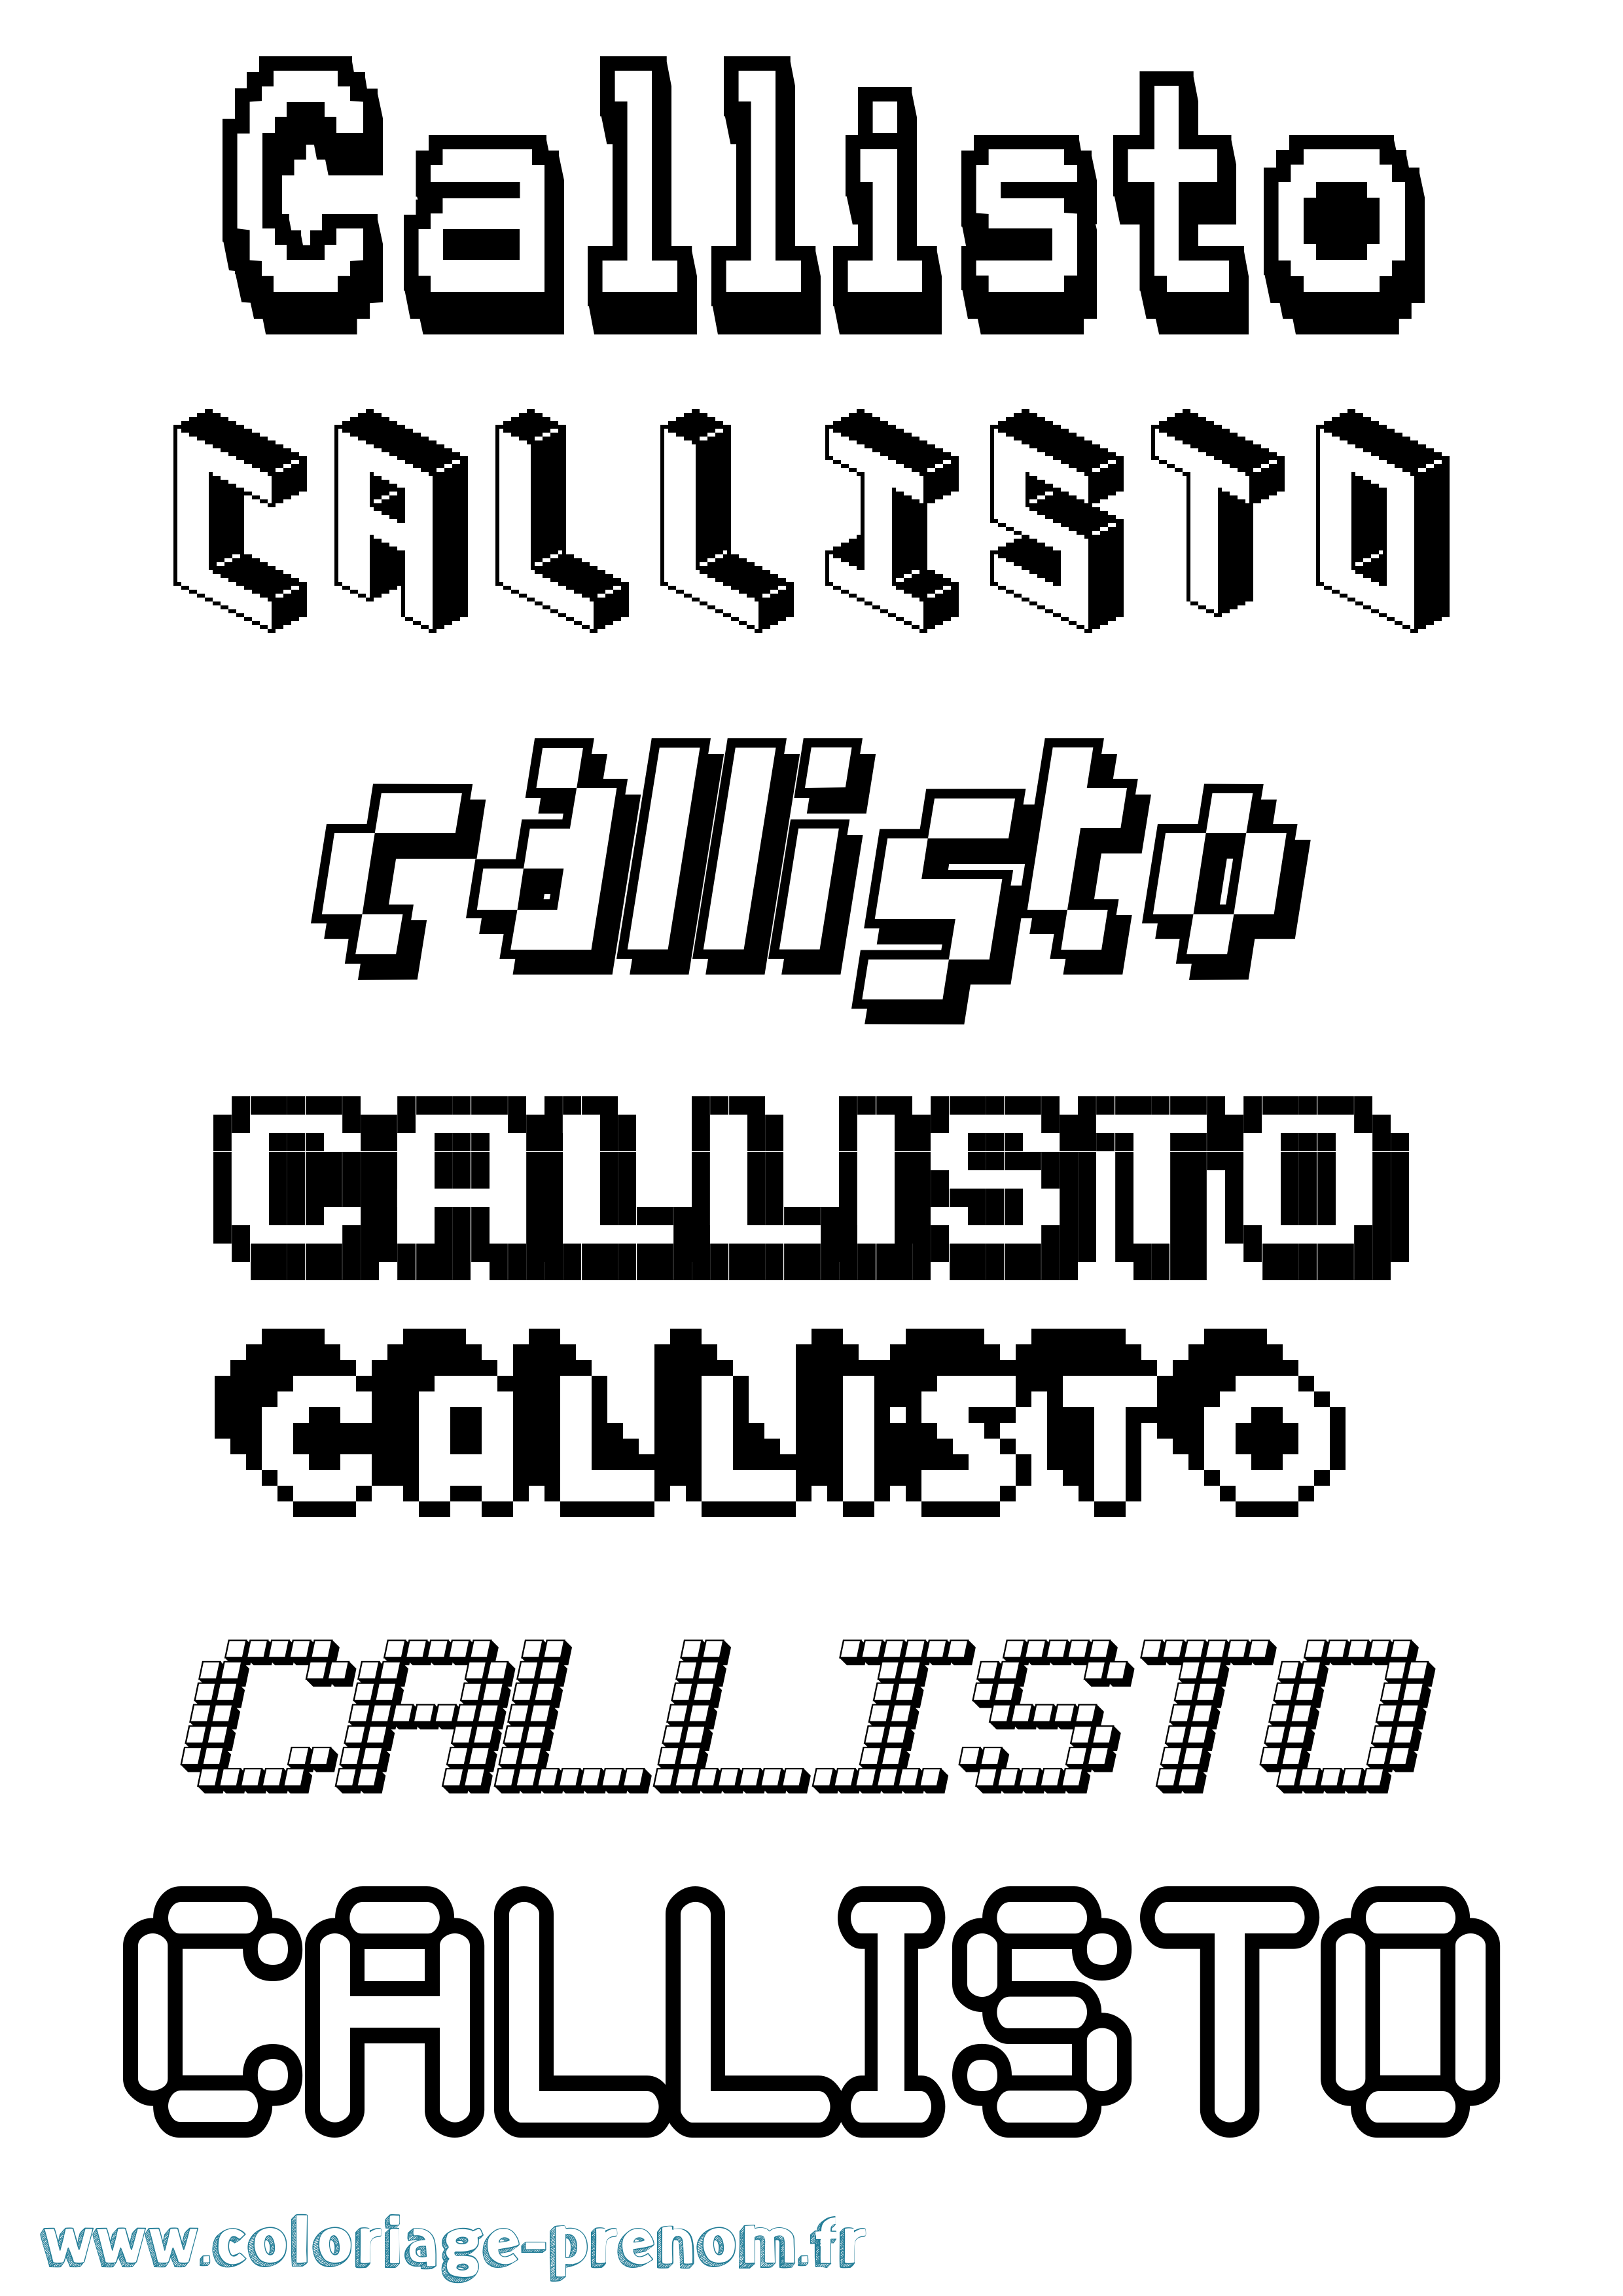 Coloriage prénom Callisto Pixel